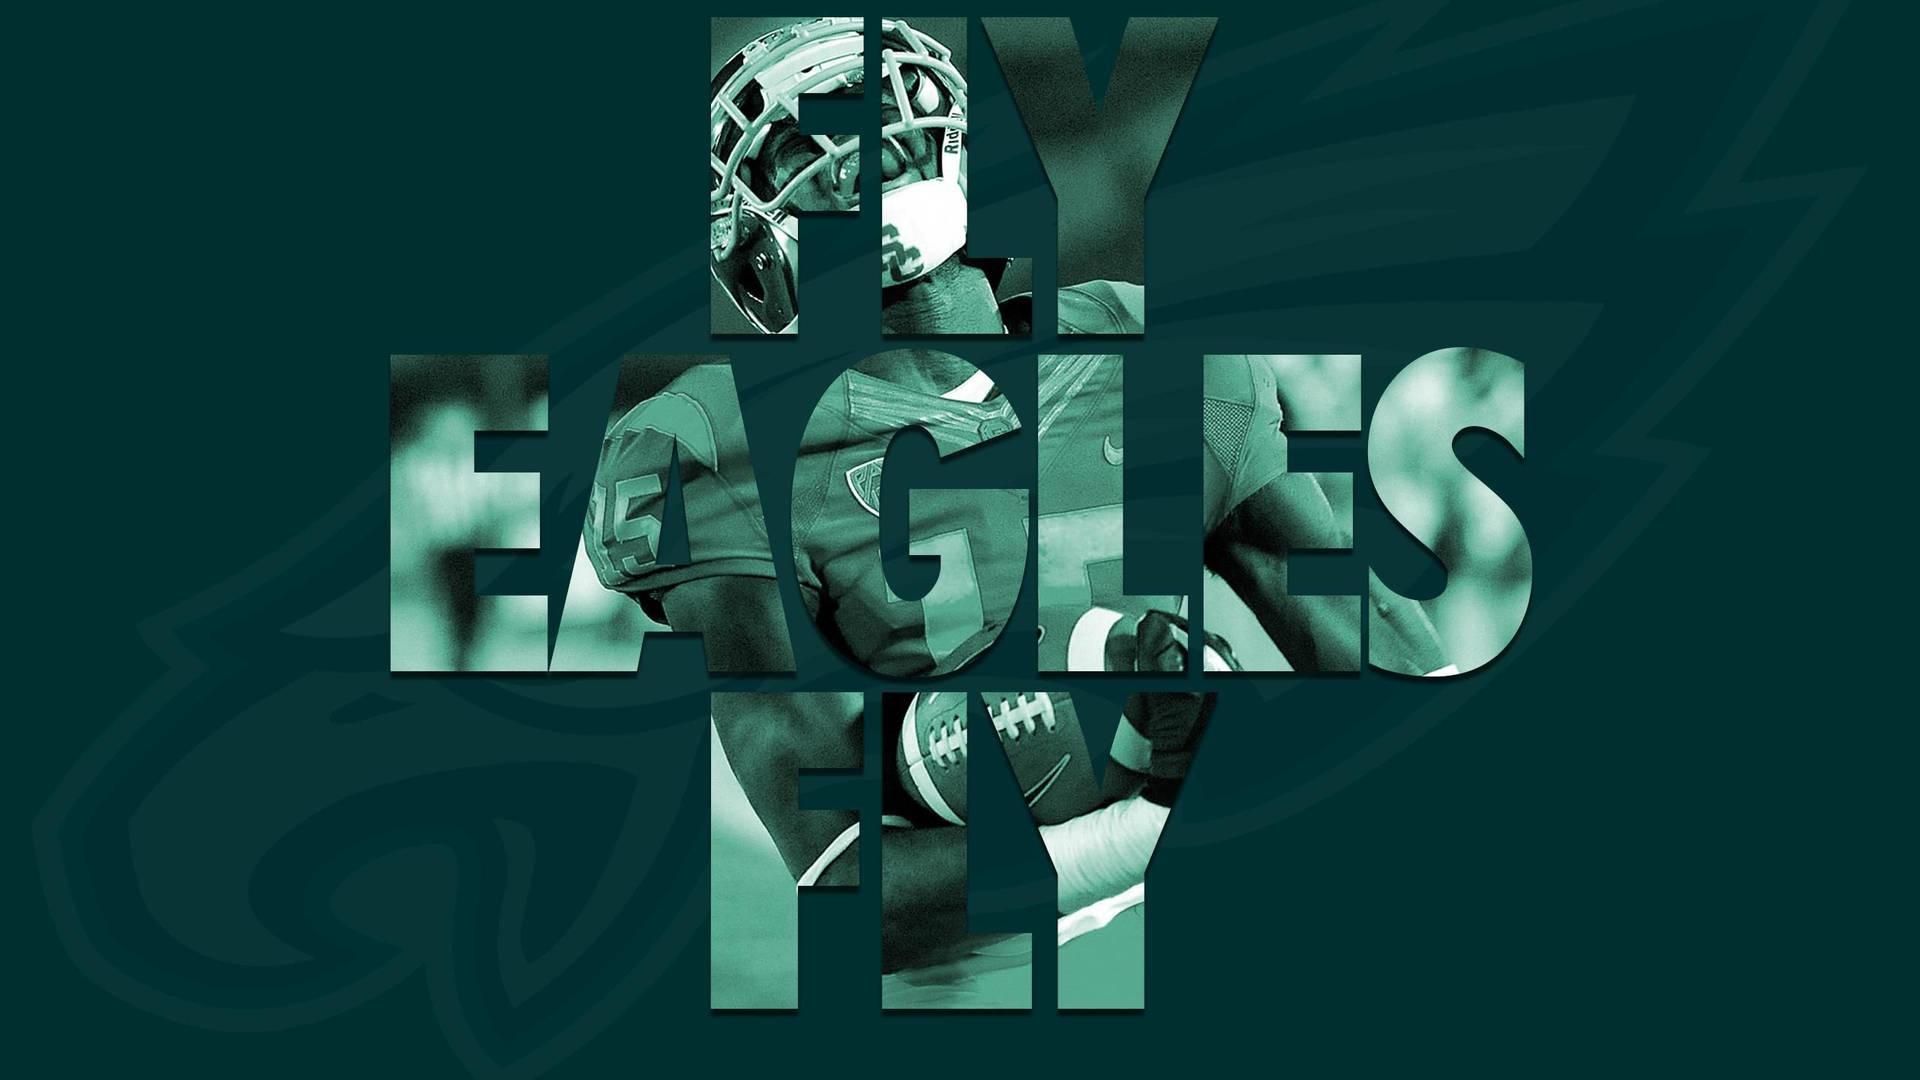 2560X1440 Philadelphia Eagles Wallpaper and Background